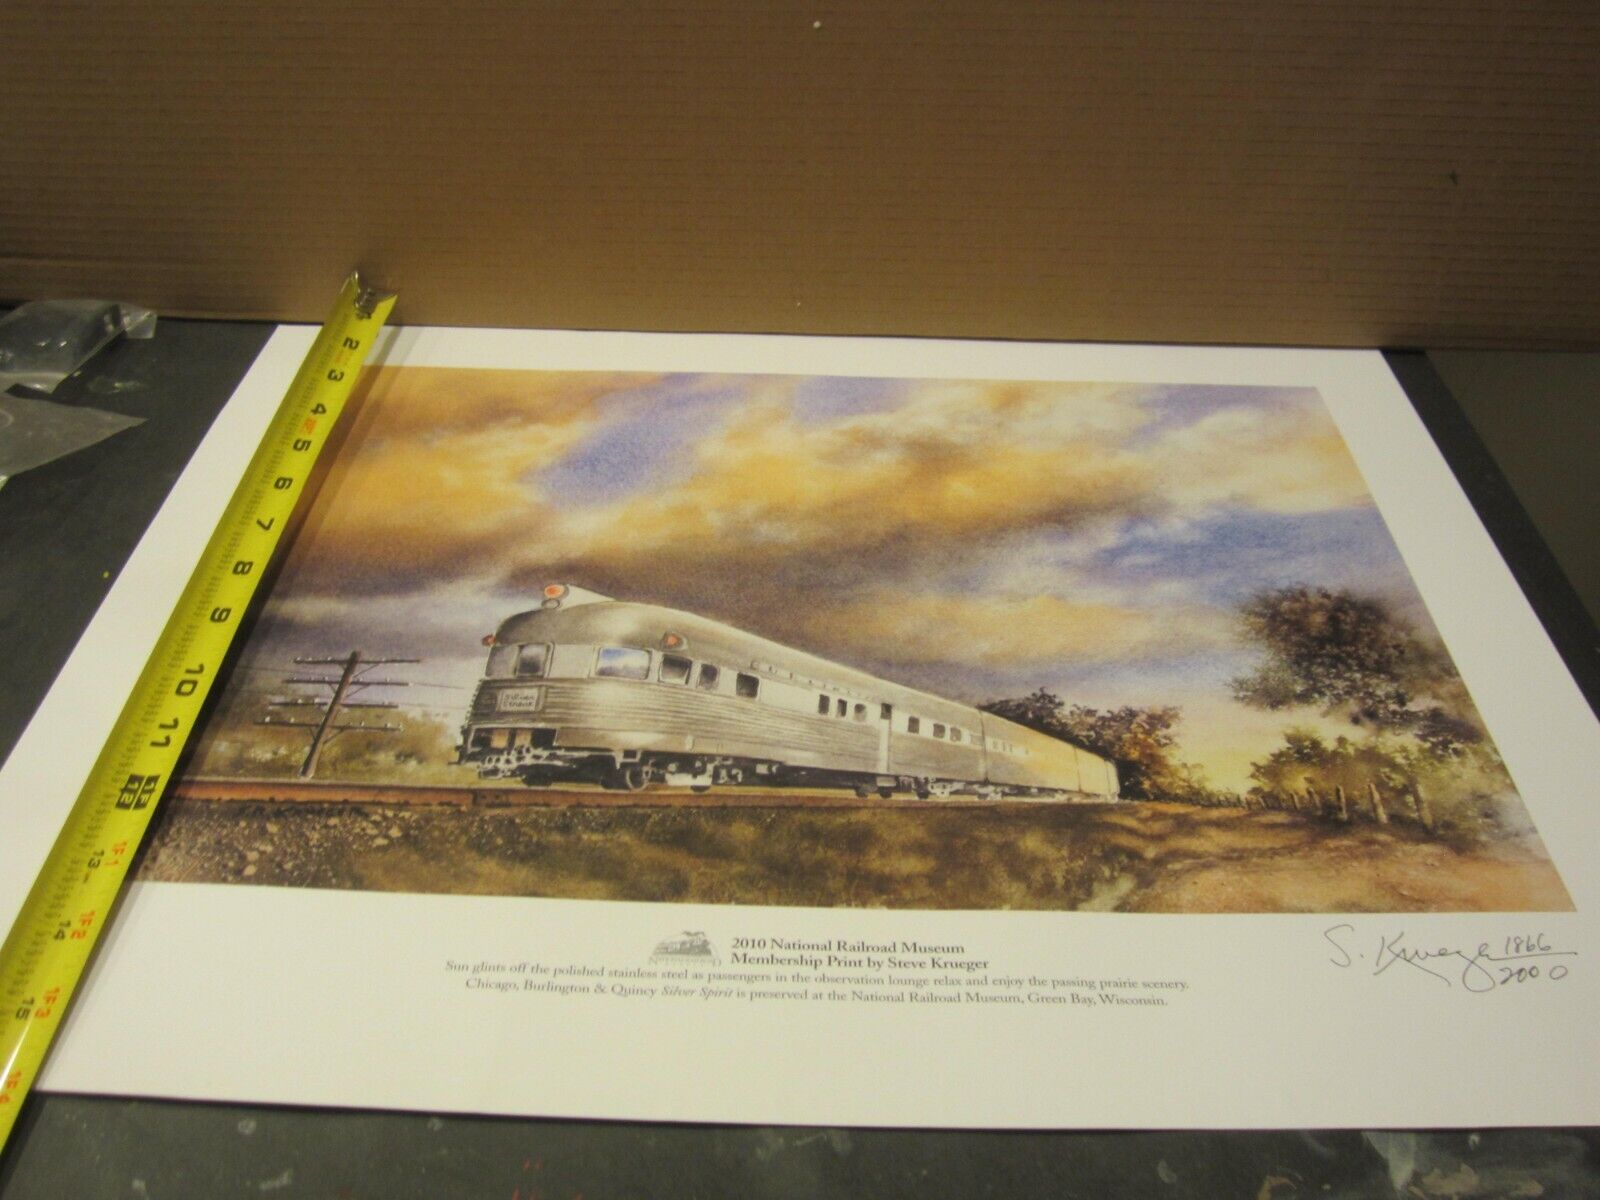 2010 National Railroad Museum Print By S. Krueger Cb&q Silver Passenger Cars